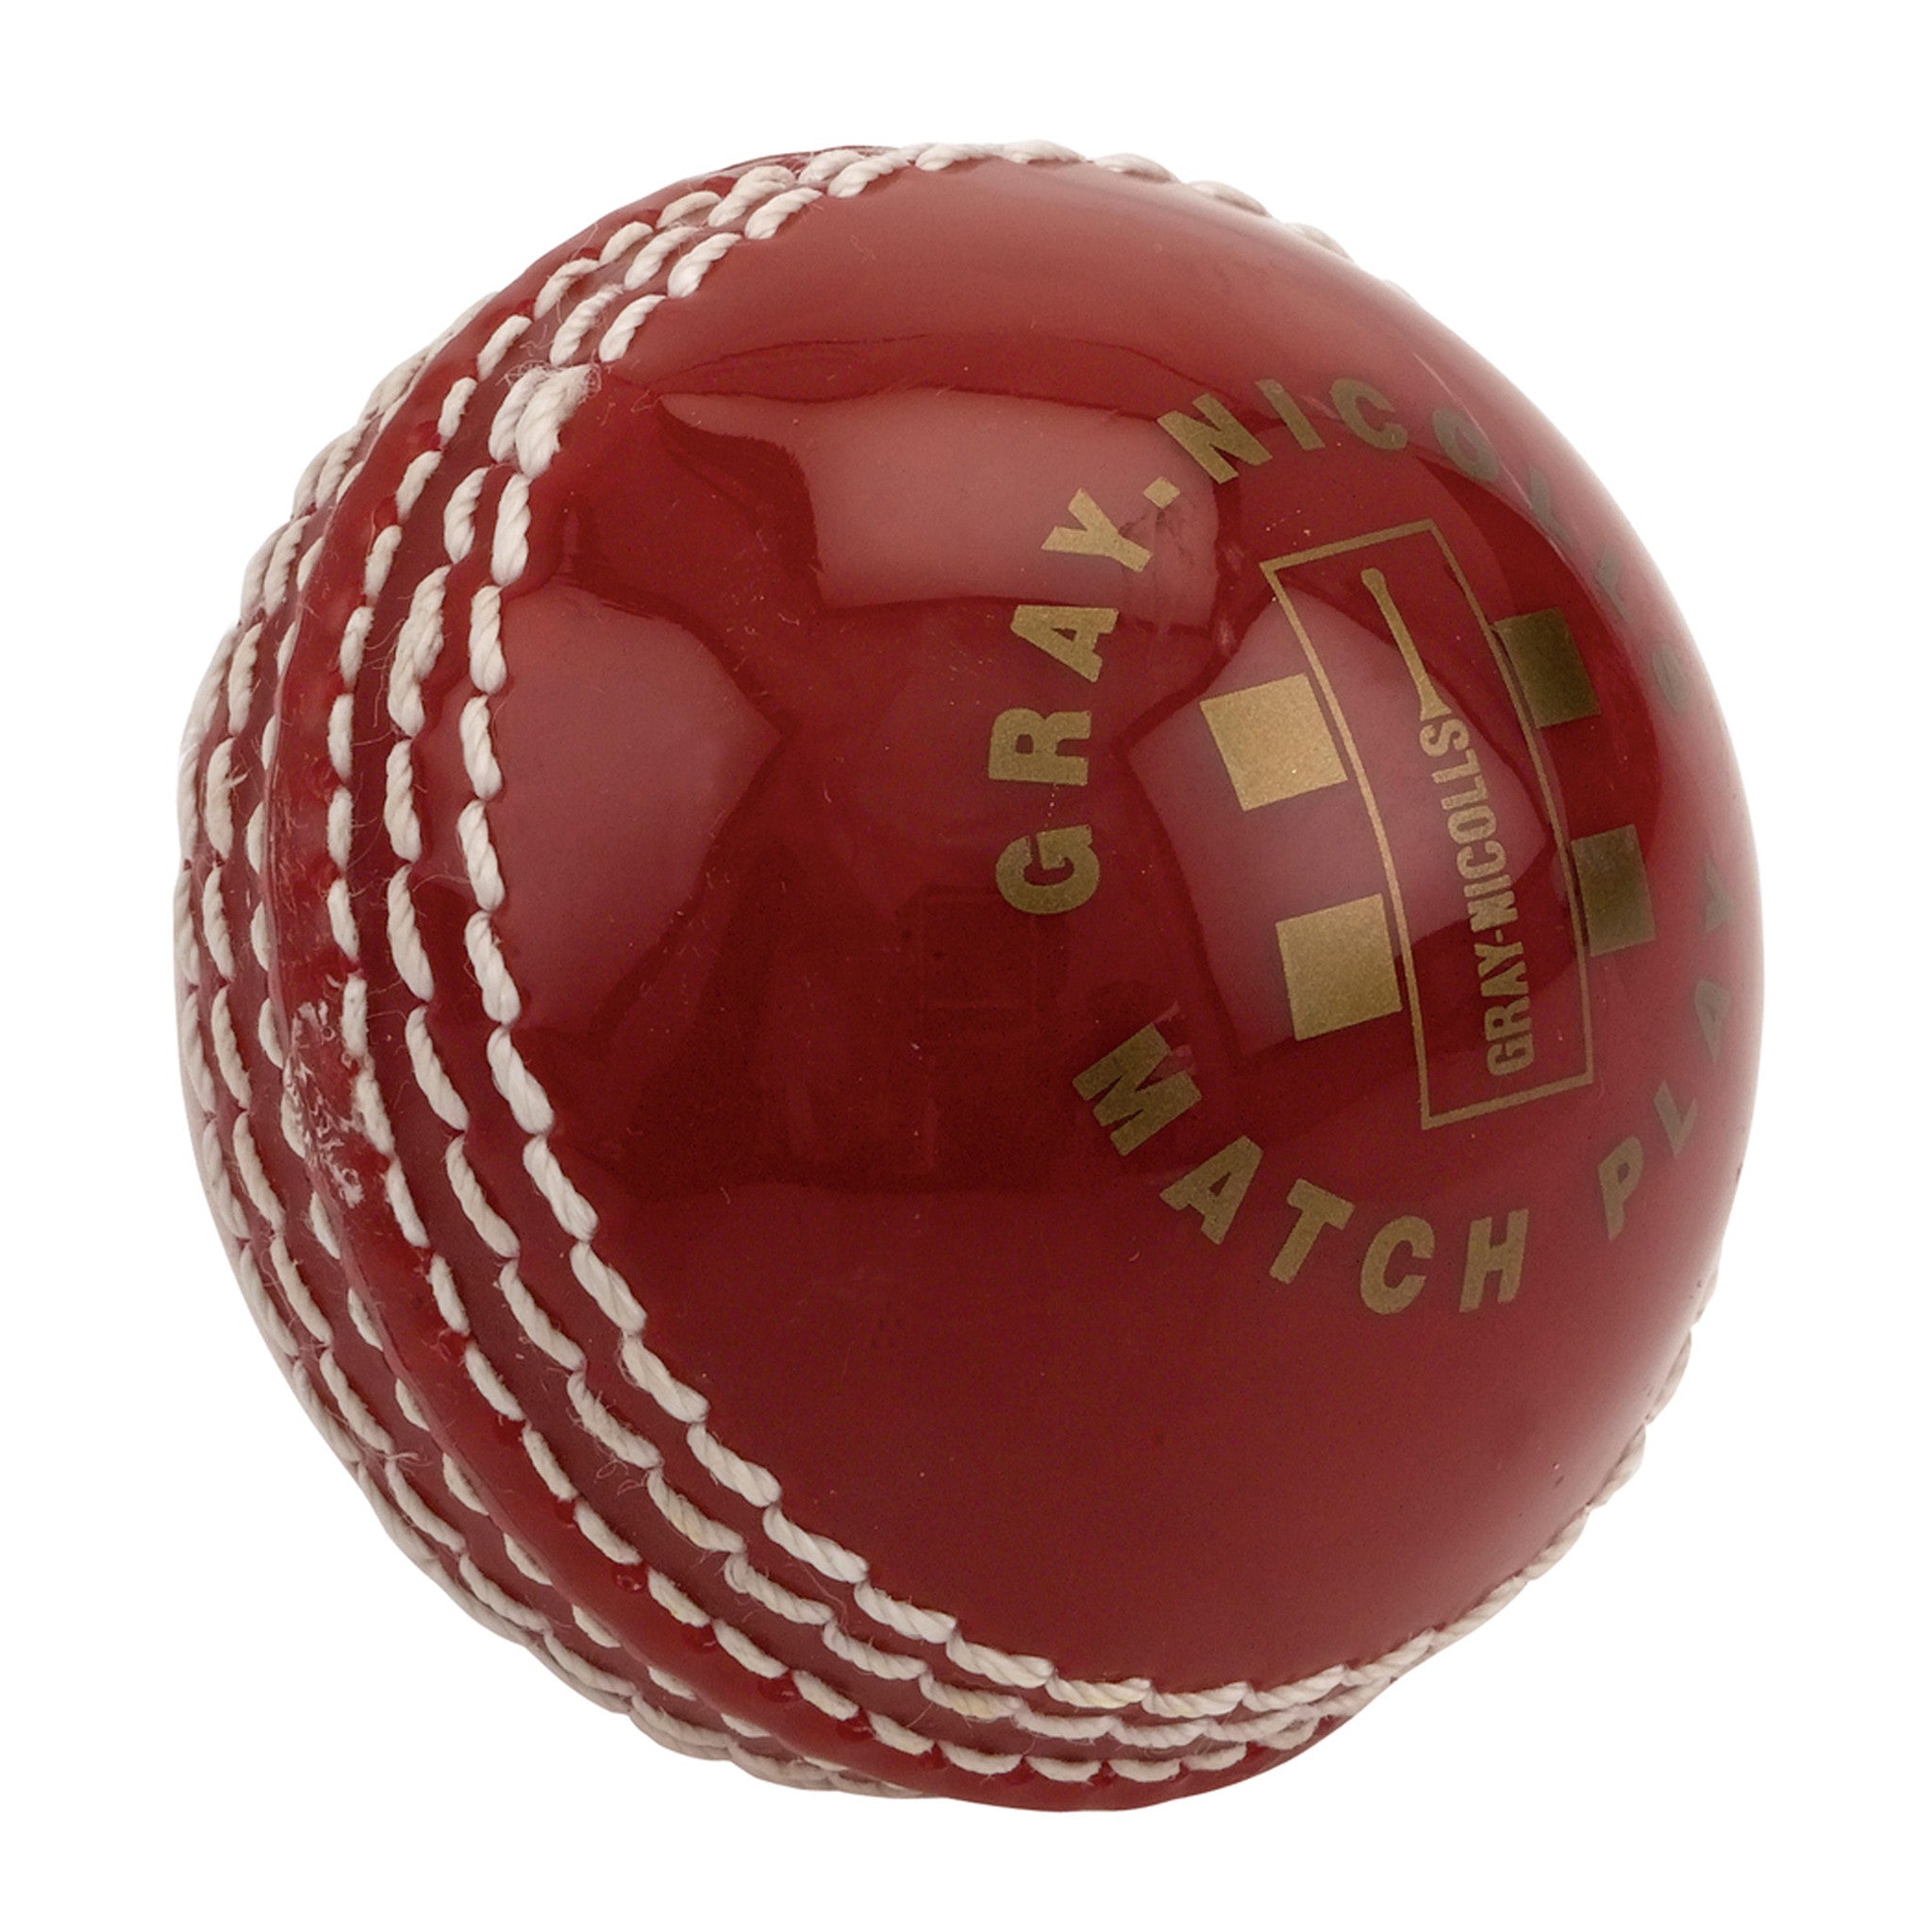 Gray Nicolls Match Play Cricket Ball